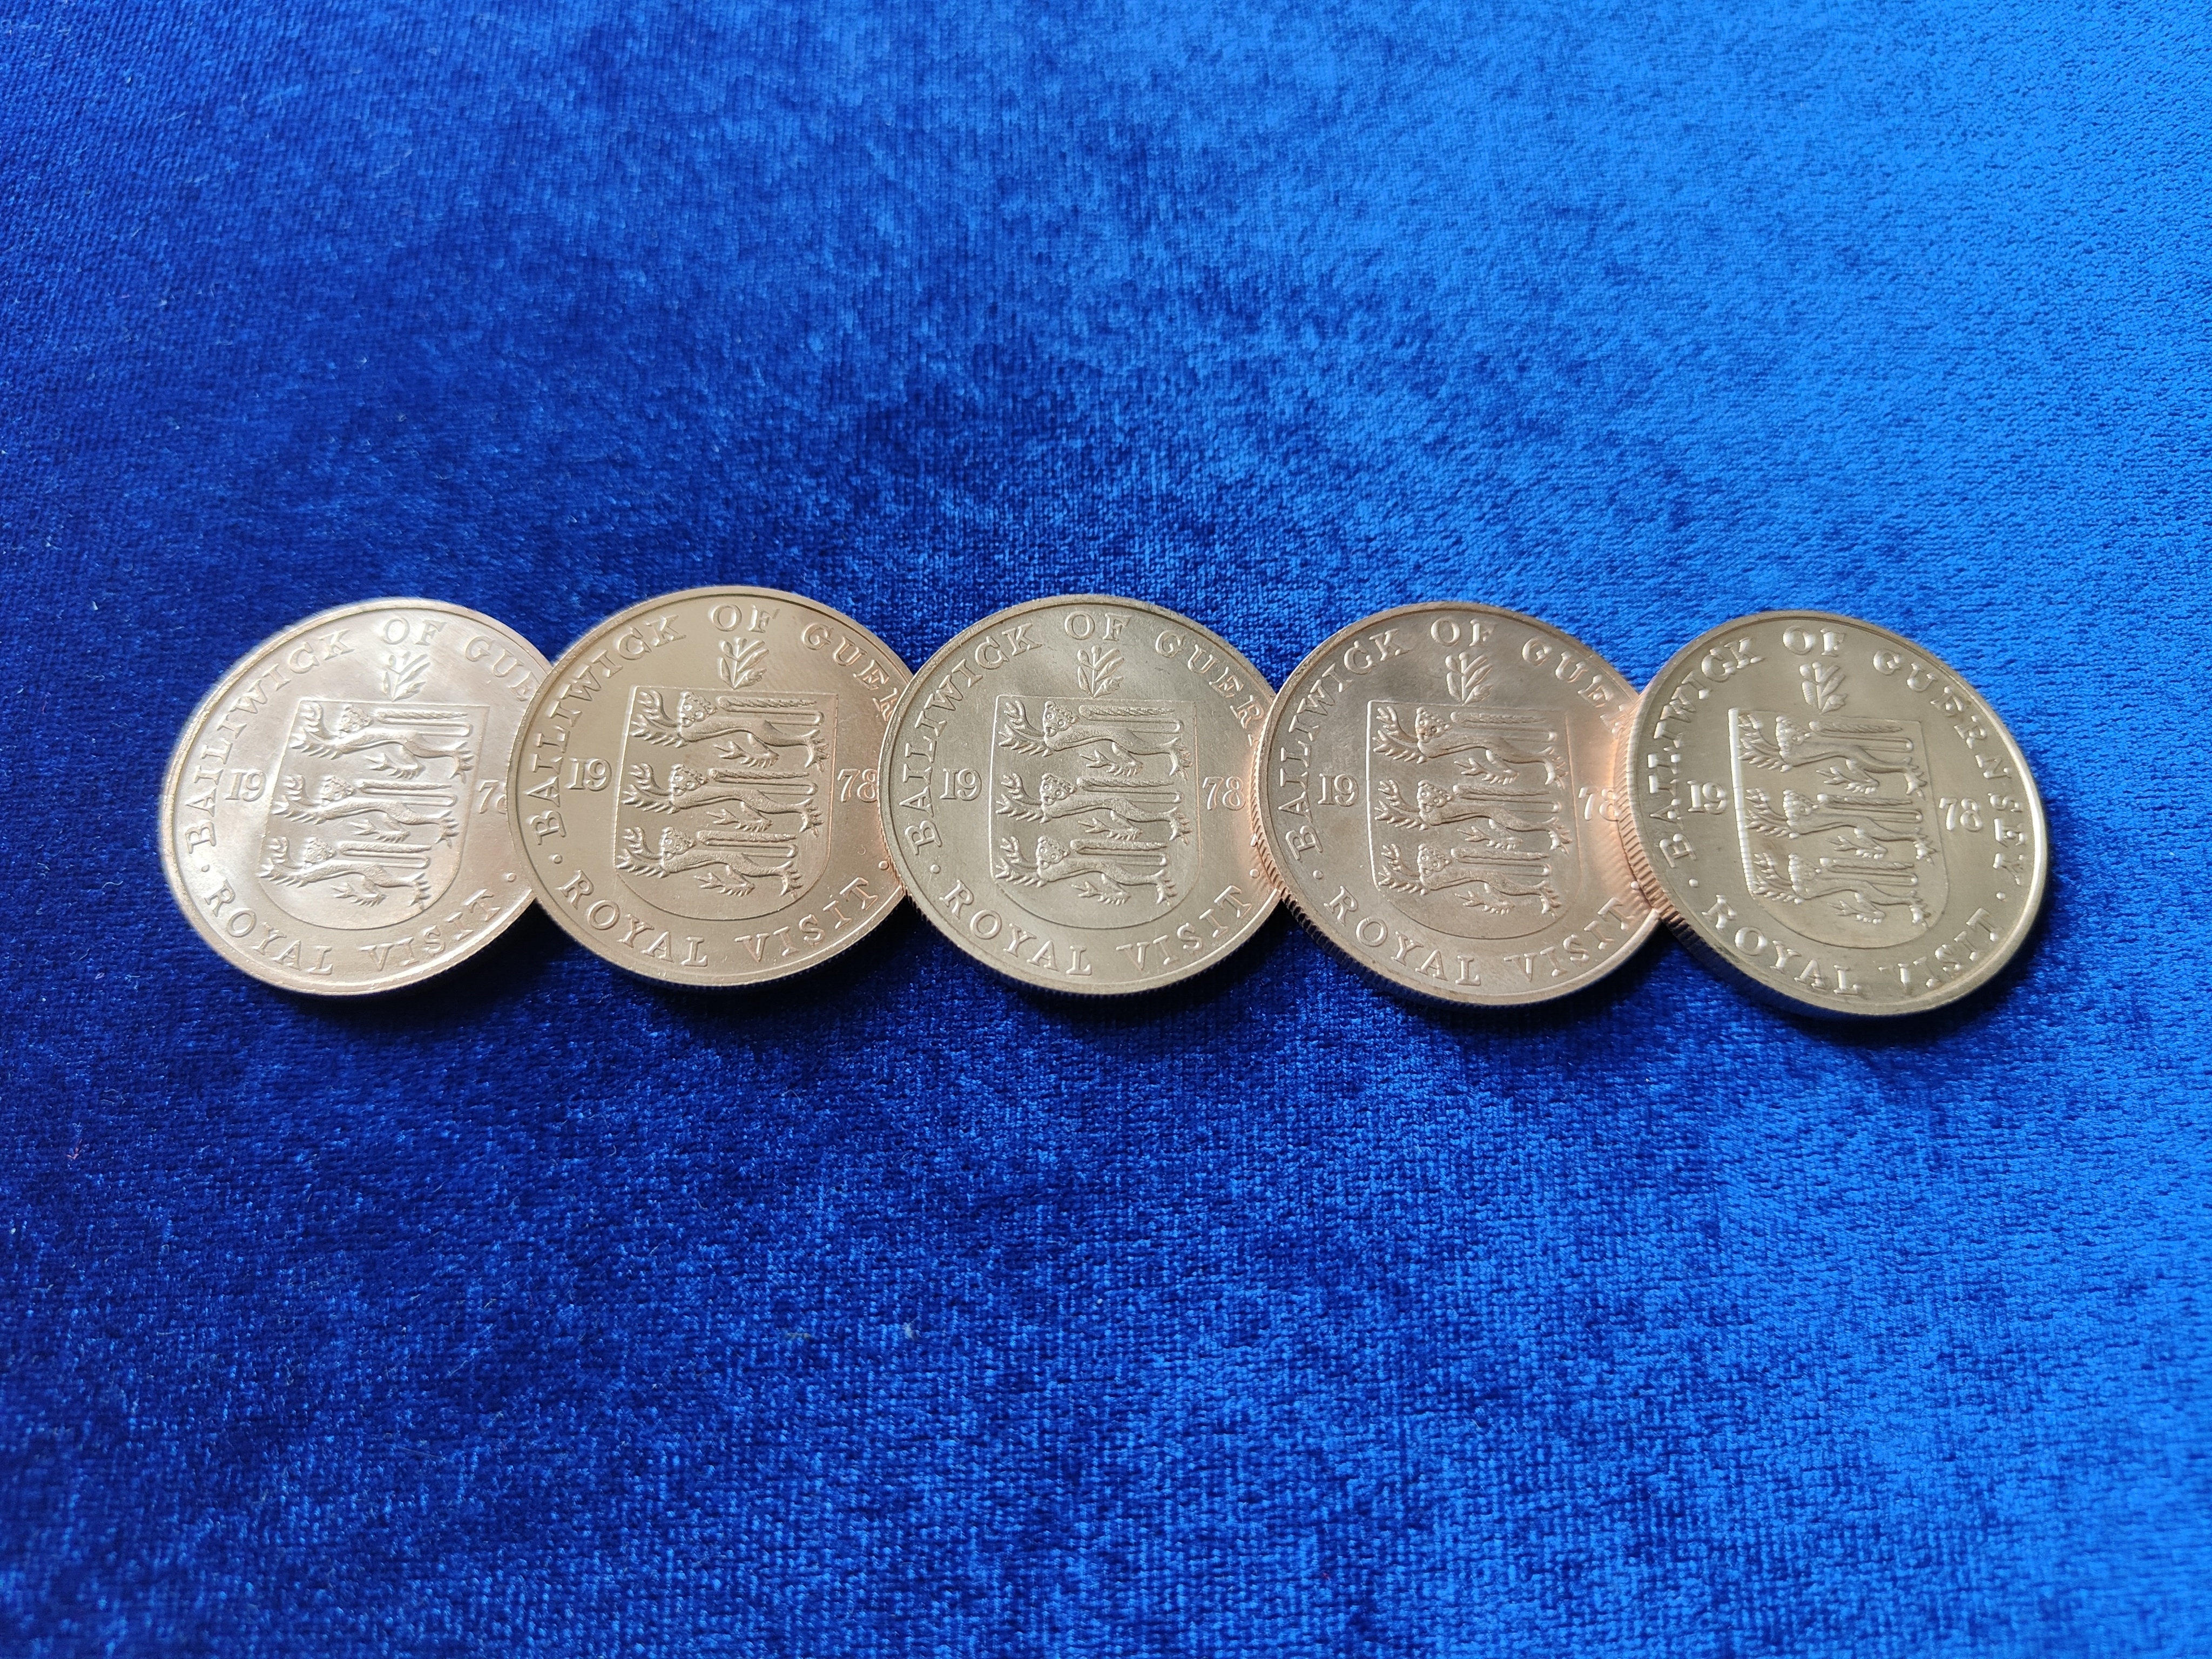 Normal copper coin